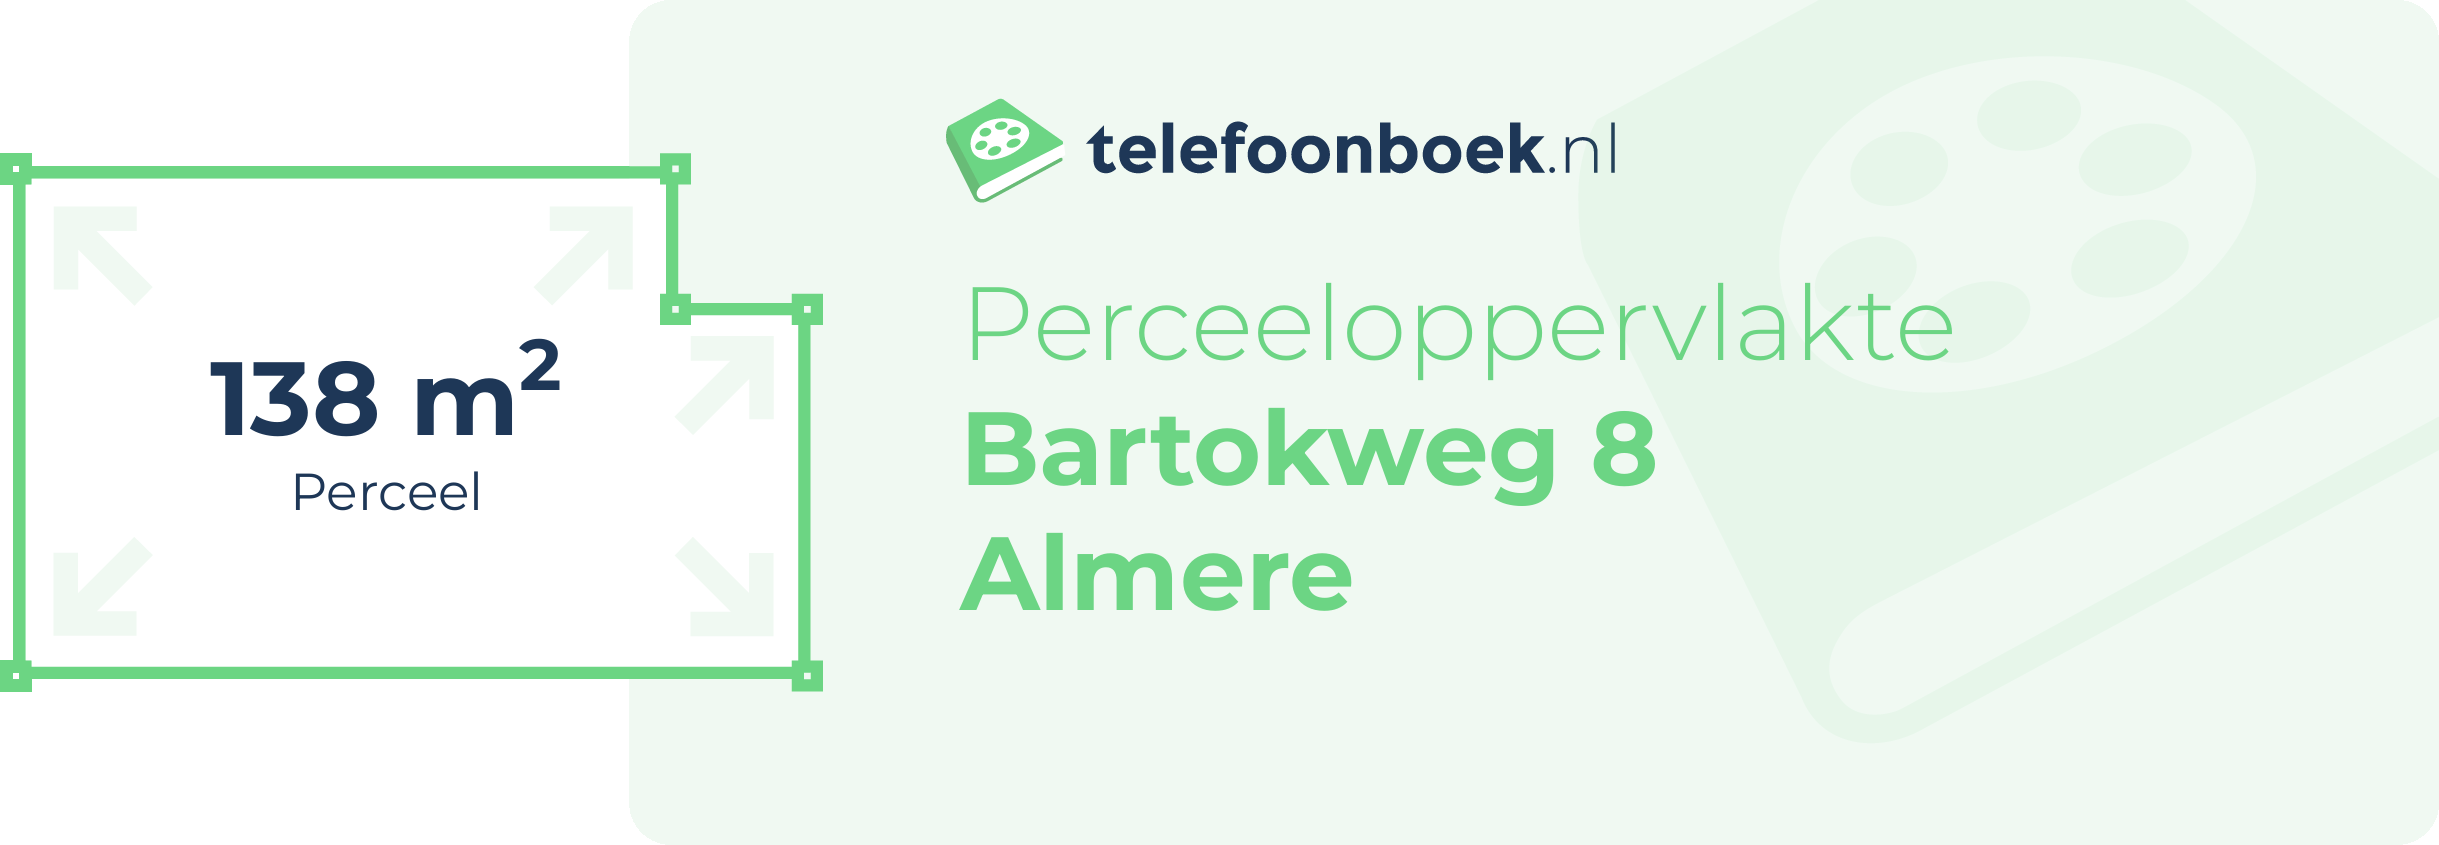 Perceeloppervlakte Bartokweg 8 Almere